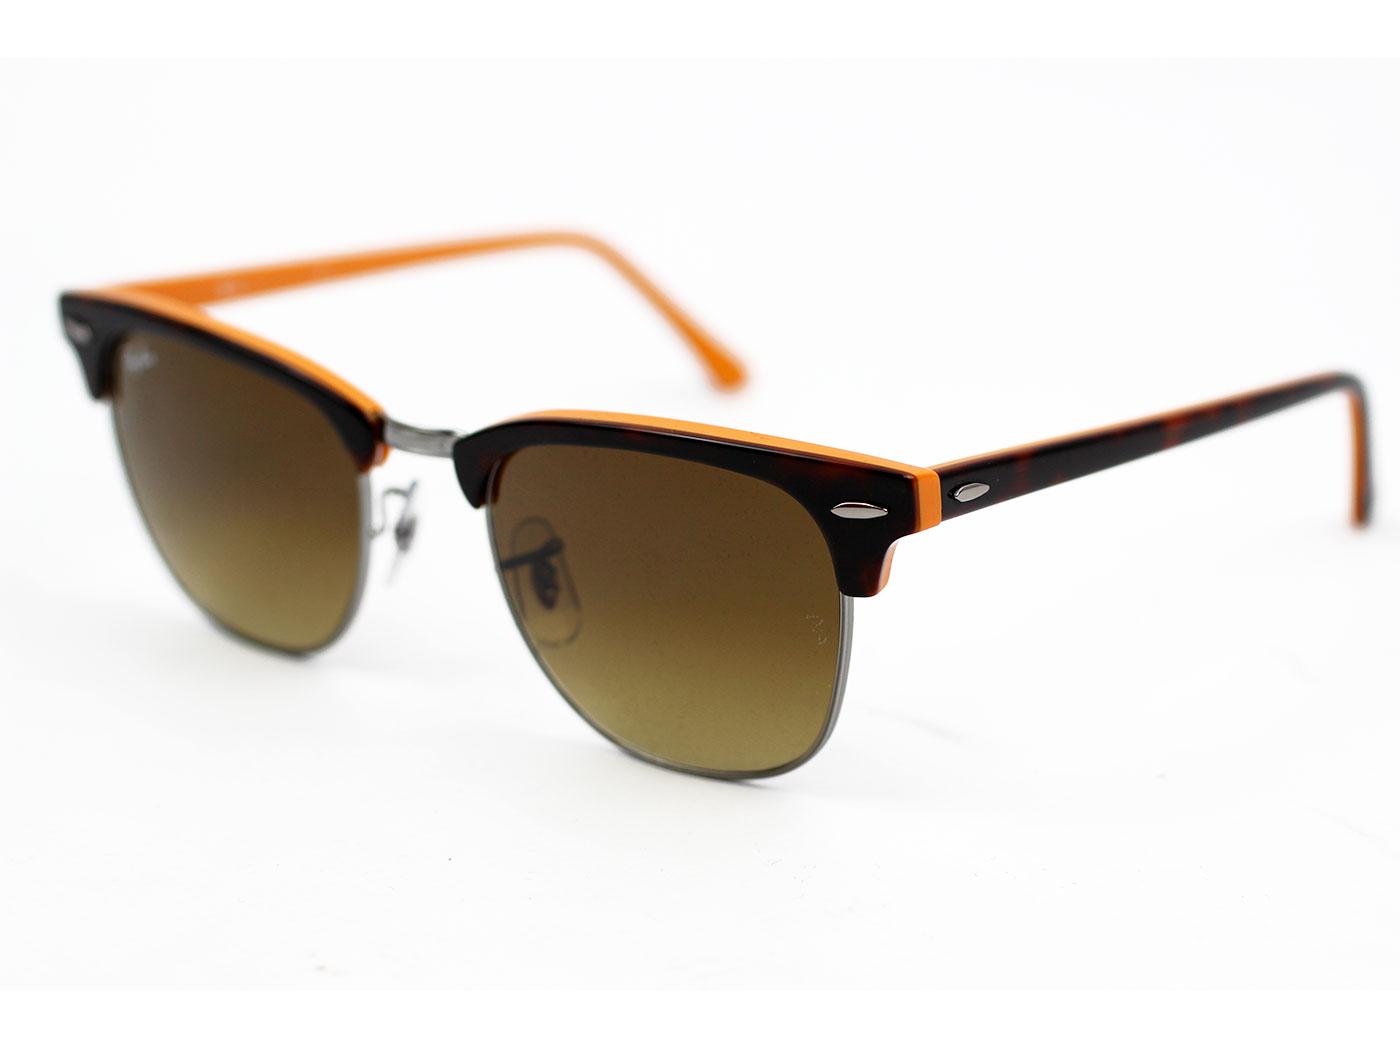 Ray-Ban Clubmaster Sunglasses in Orange 